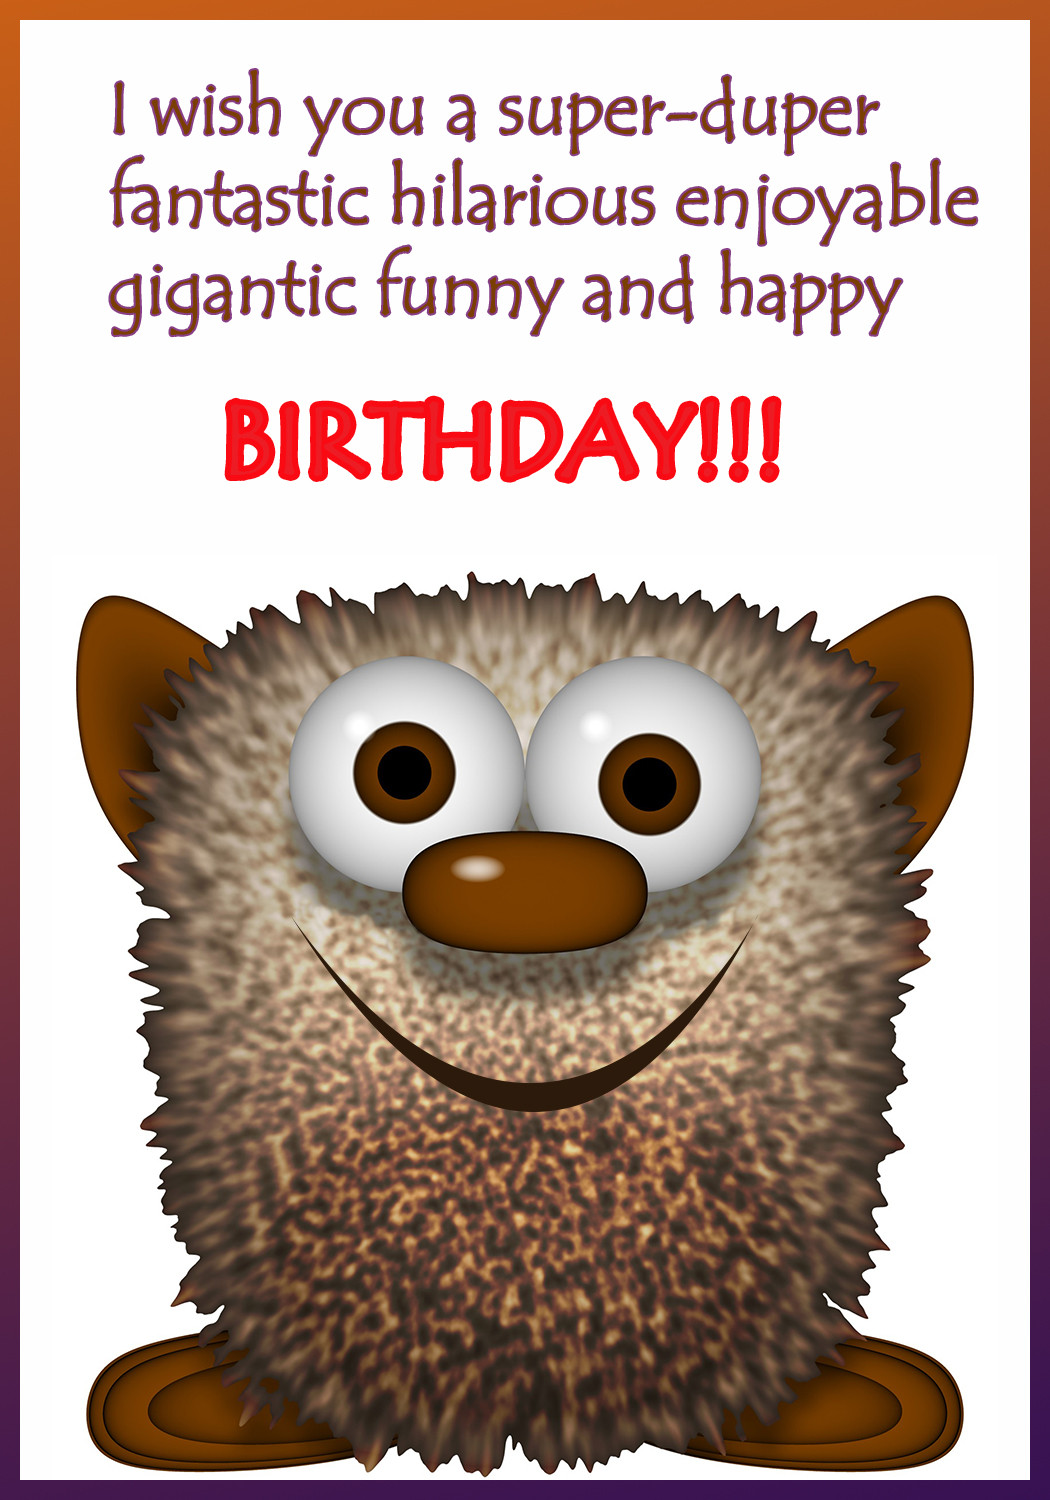 Happy Birthday Cards Funny
 Funny Printable Birthday Cards